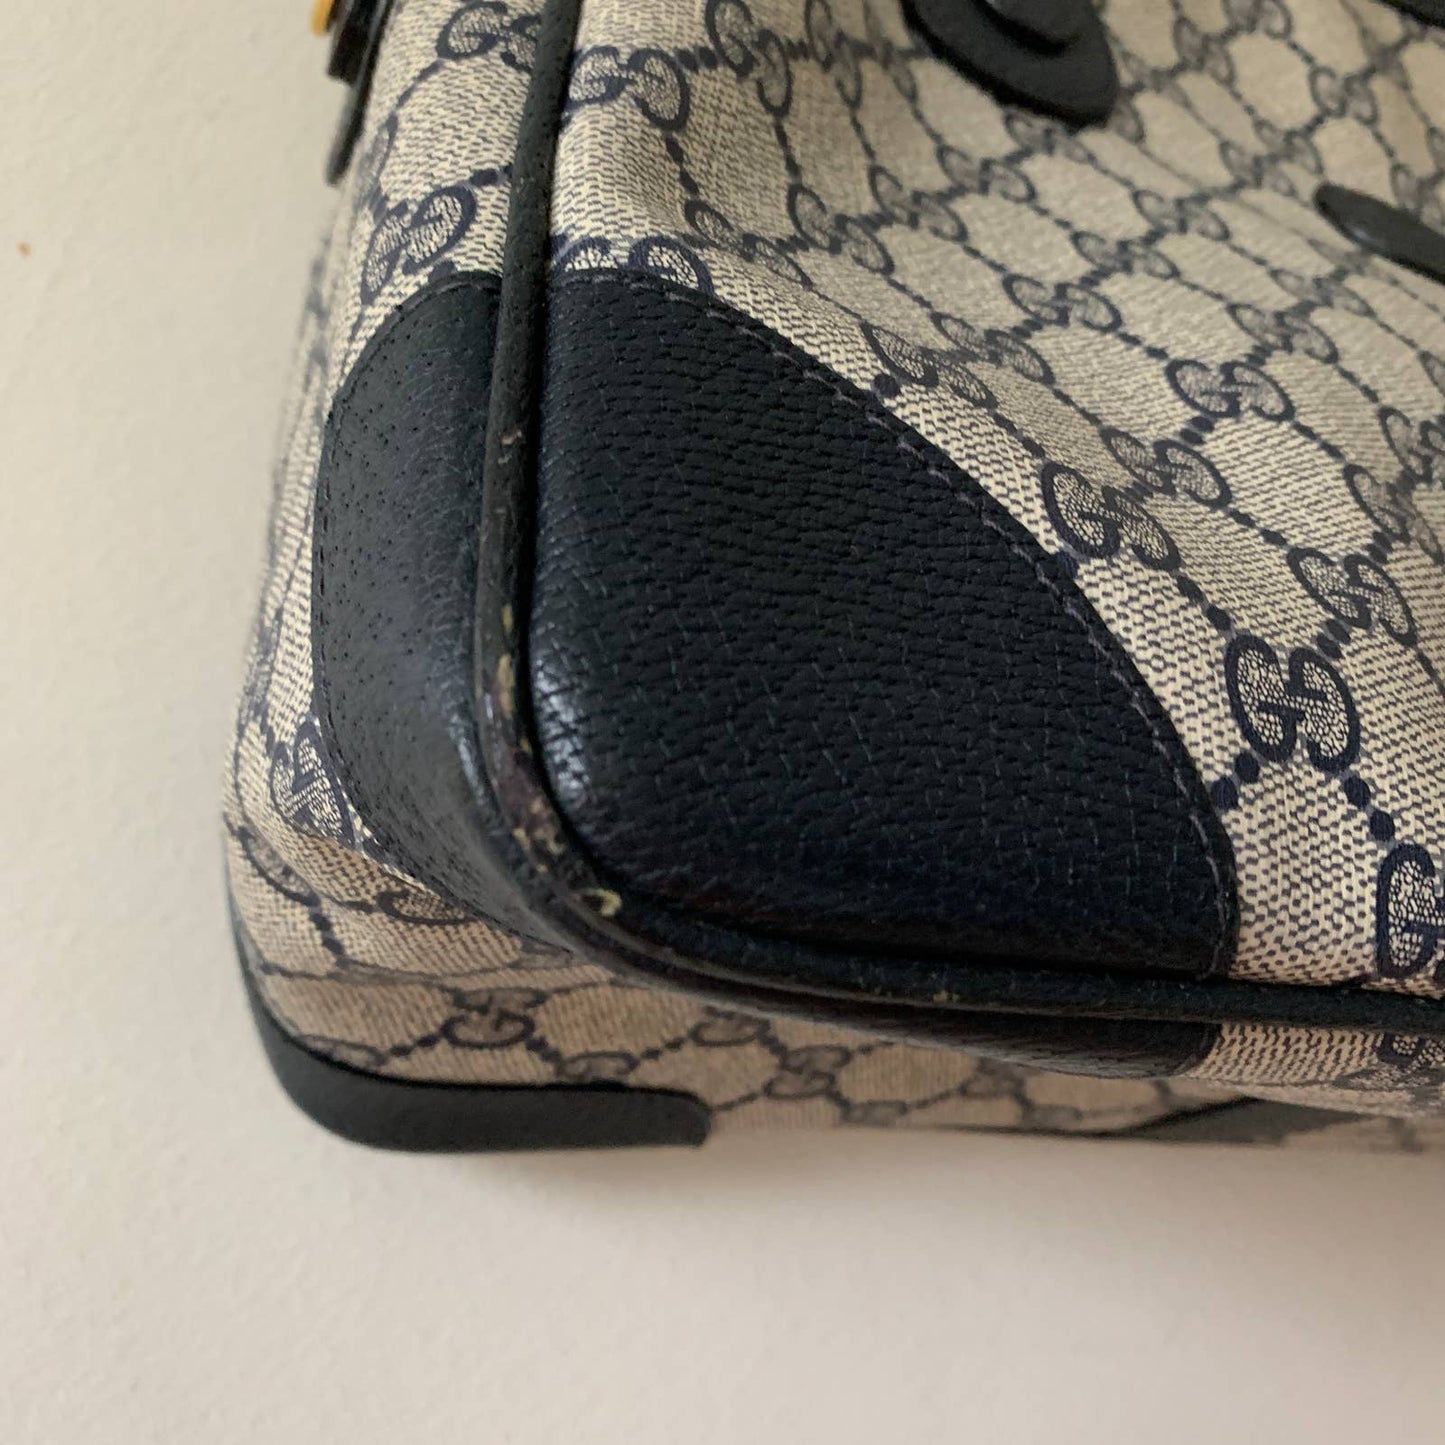 Vintage Authentic Gucci Boston Navy Blue Gray Handbag Purse Satchel